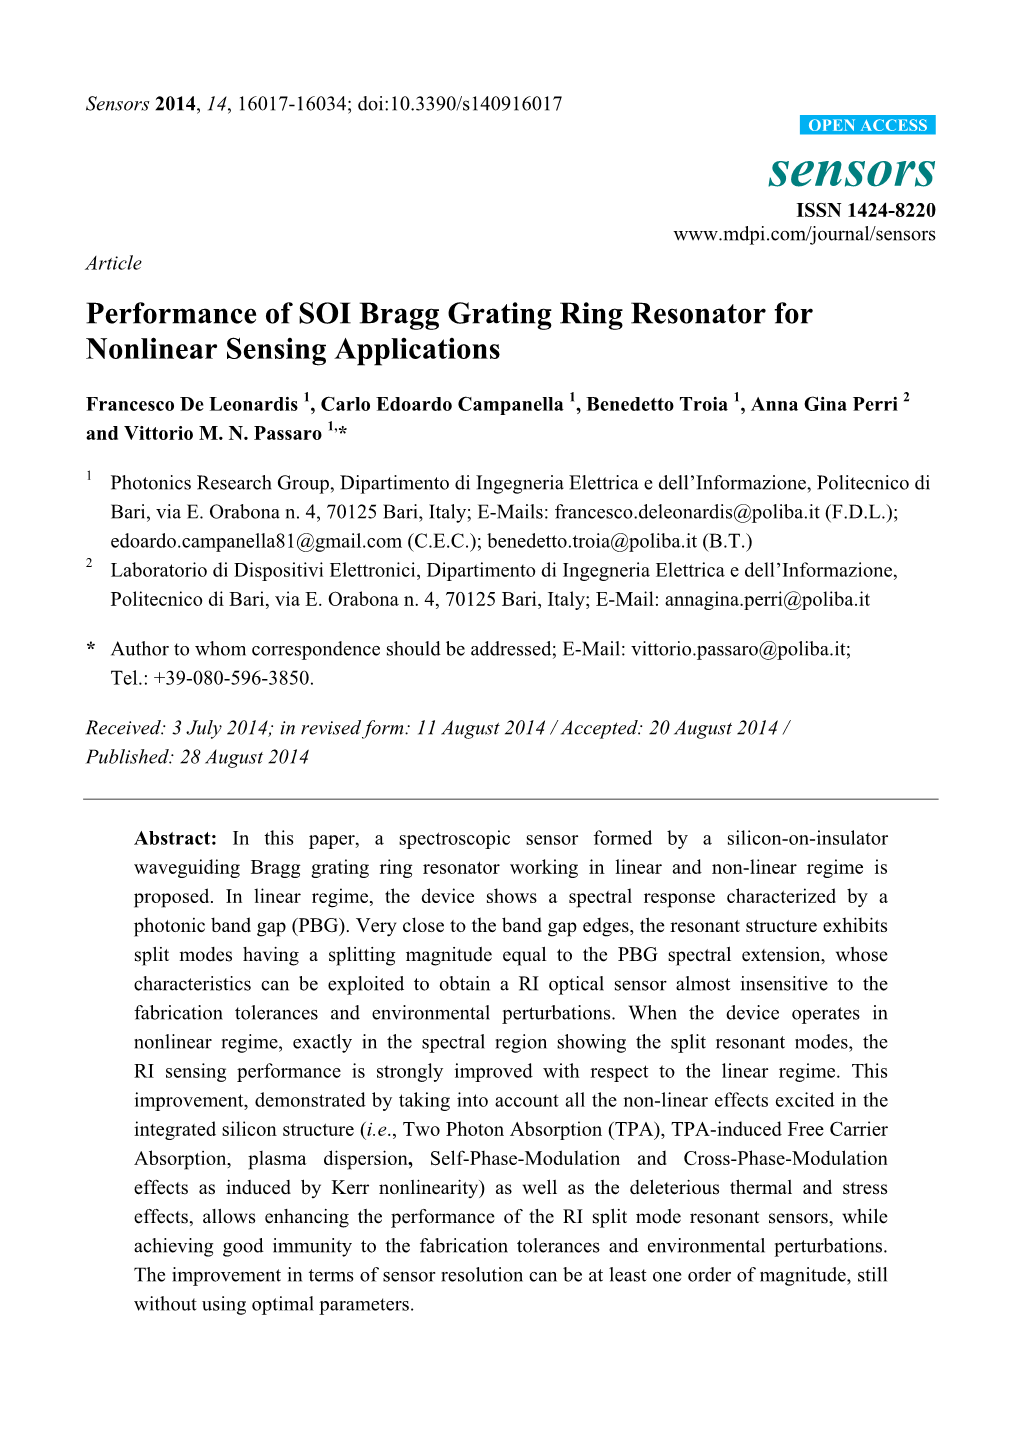 Performance of SOI Bragg Grating Ring Resonator for Nonlinear Sensing Applications